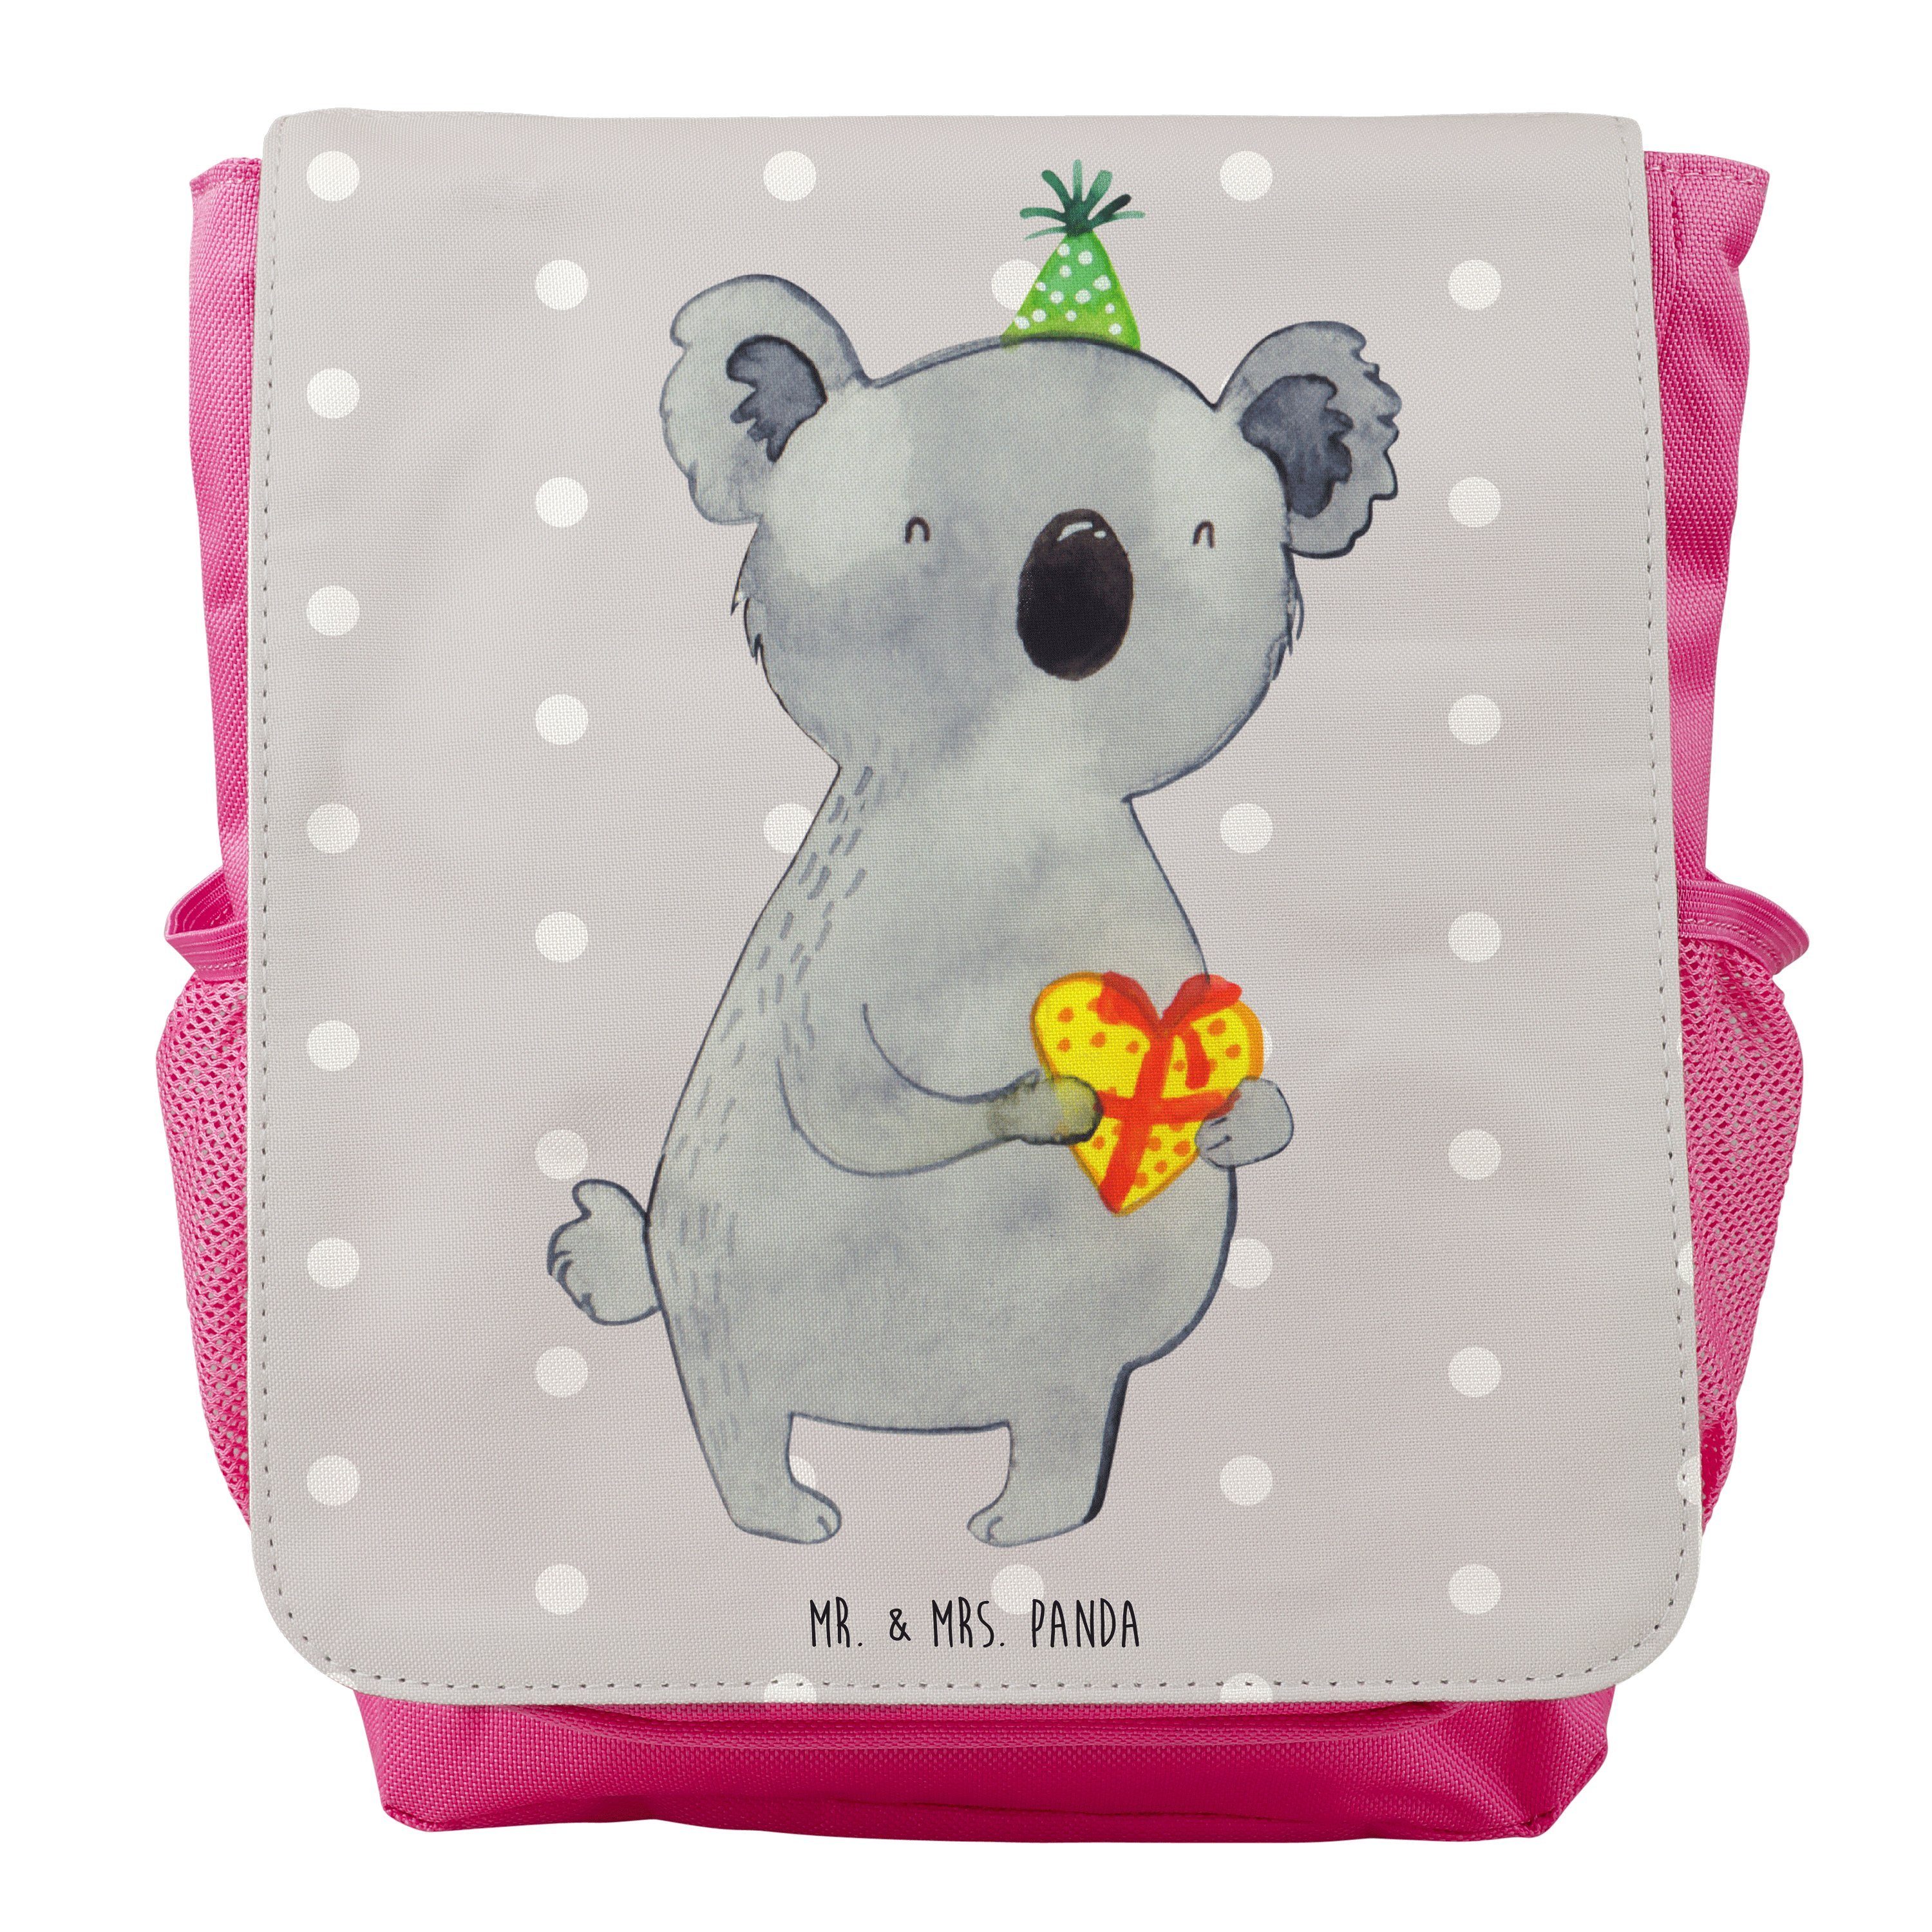 Mr. & Mrs. Panda Kinderrucksack Mädchen Koala Geschenk - Grau Pastell - Kids, Rucksack, Rucksack Kind